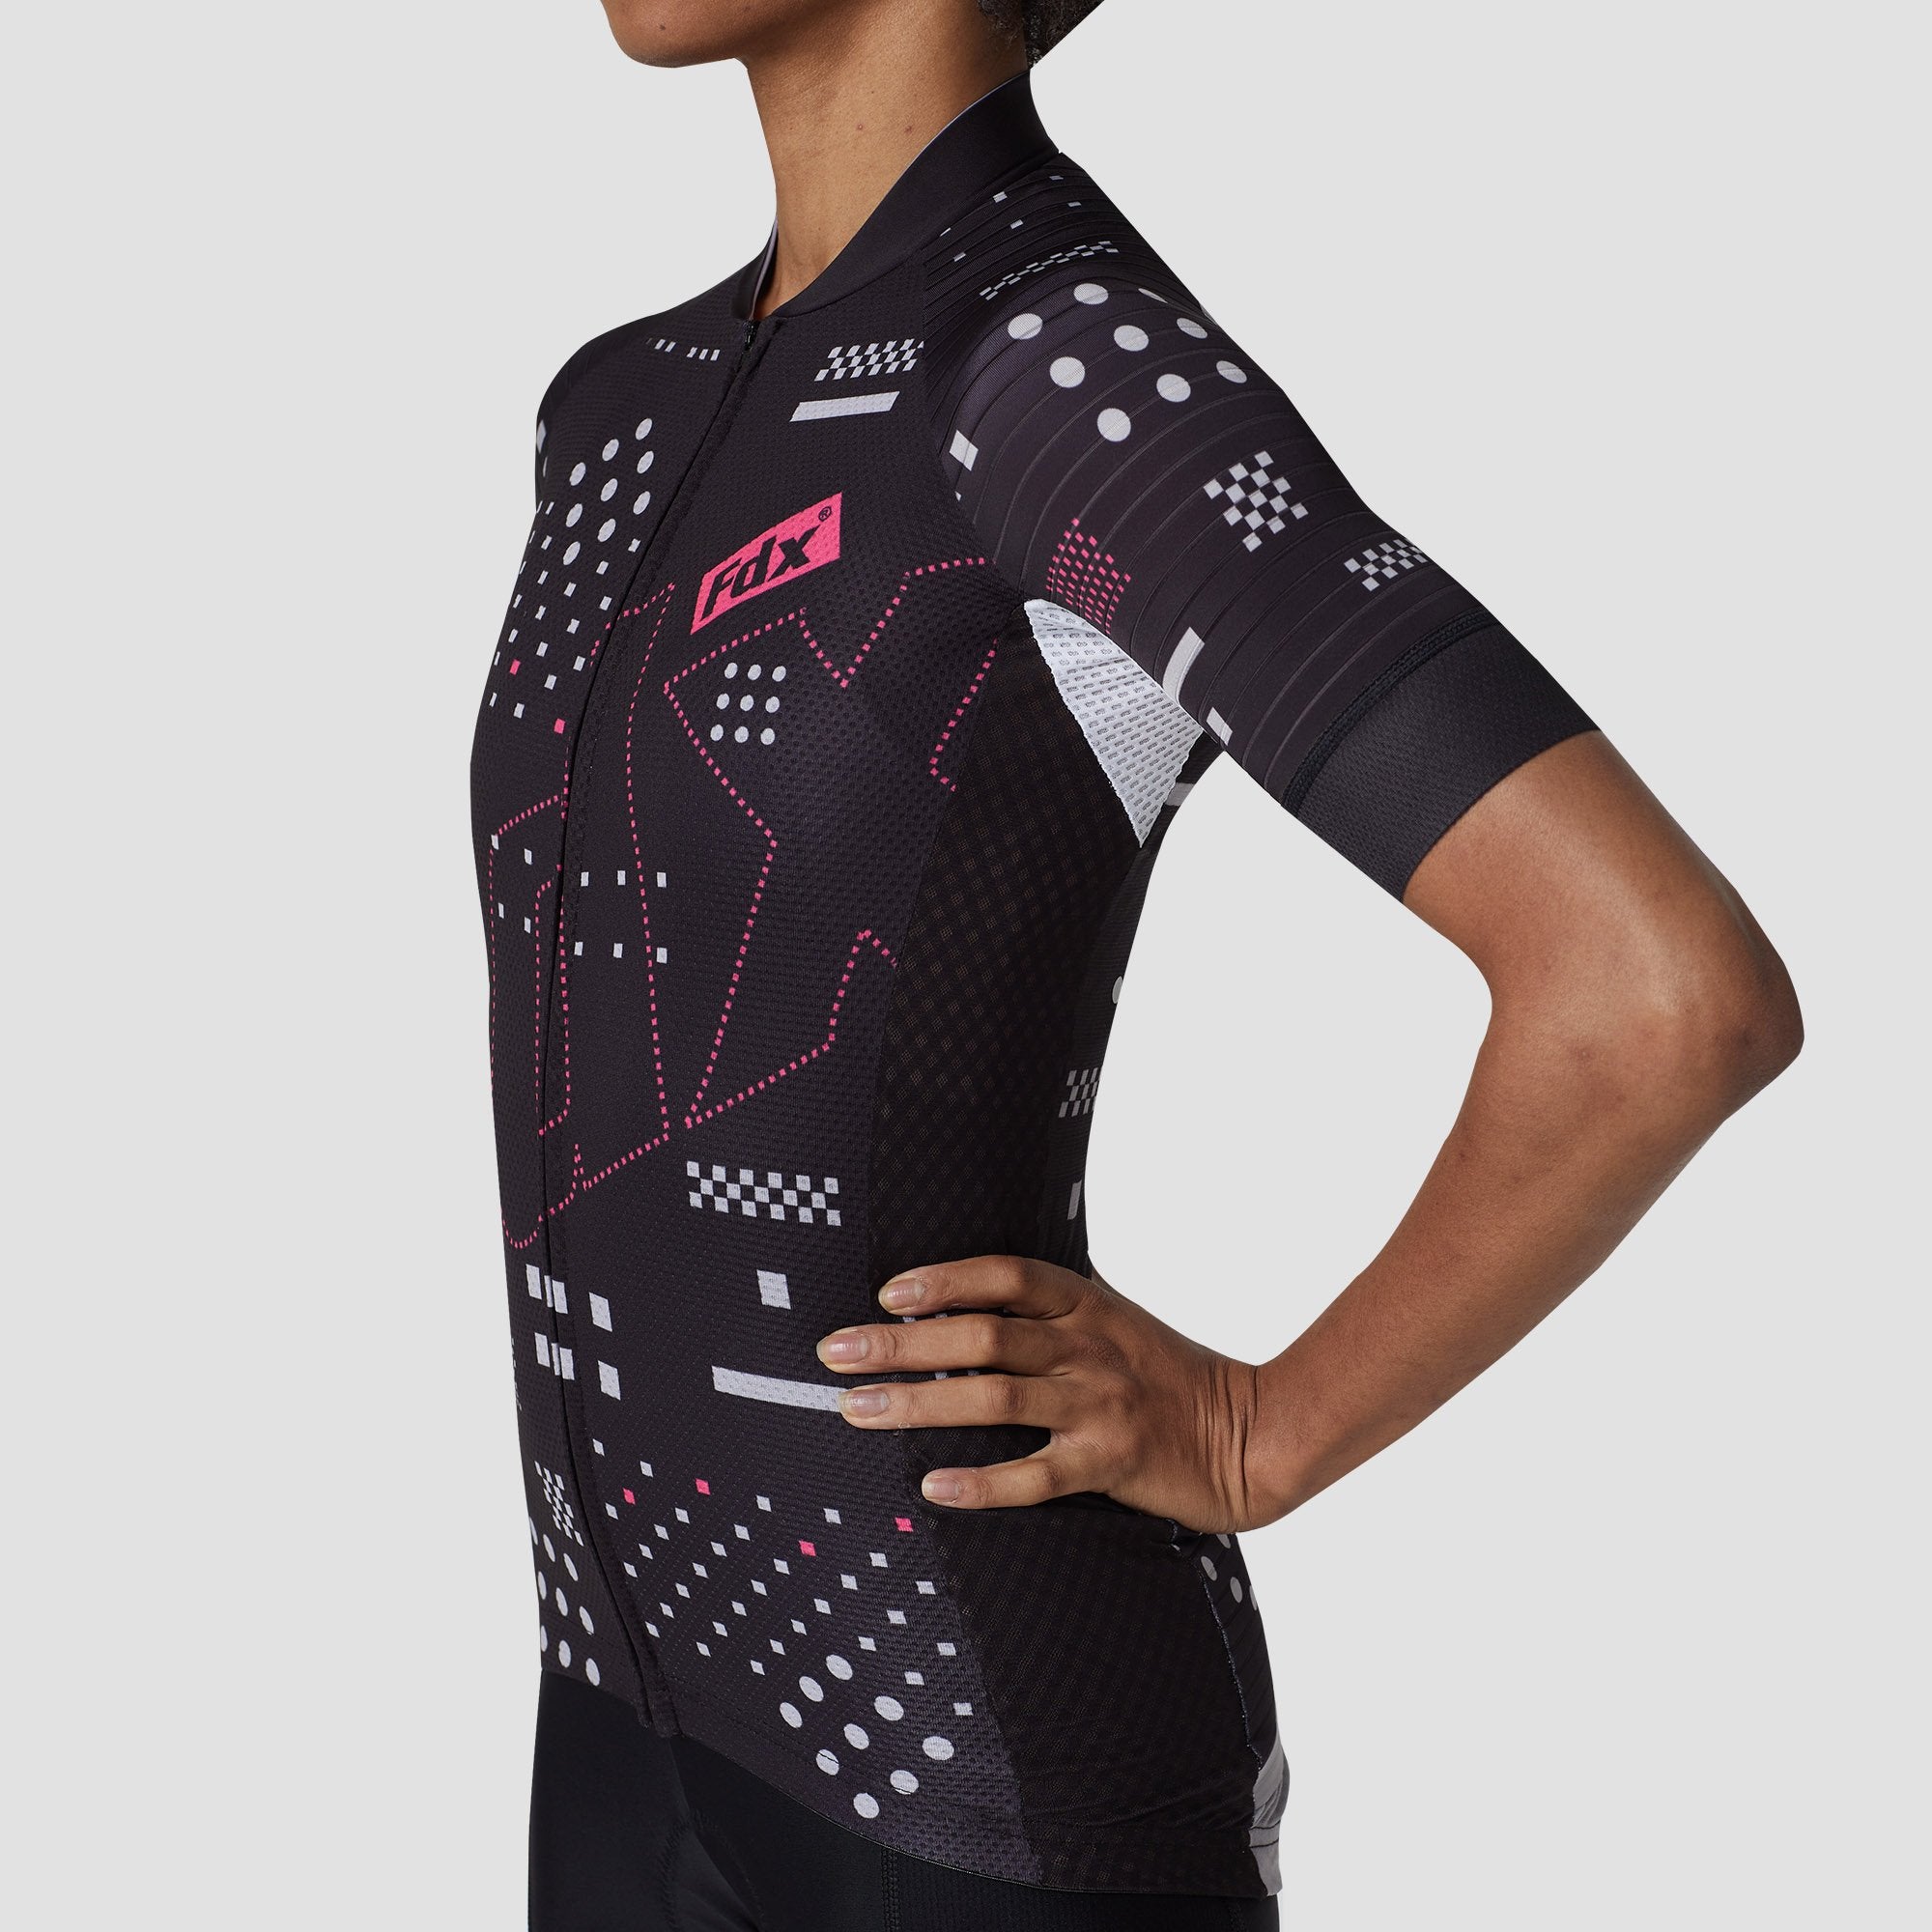 Fdx All Day Black Women's Summer Short Sleeve Cycling Jersey